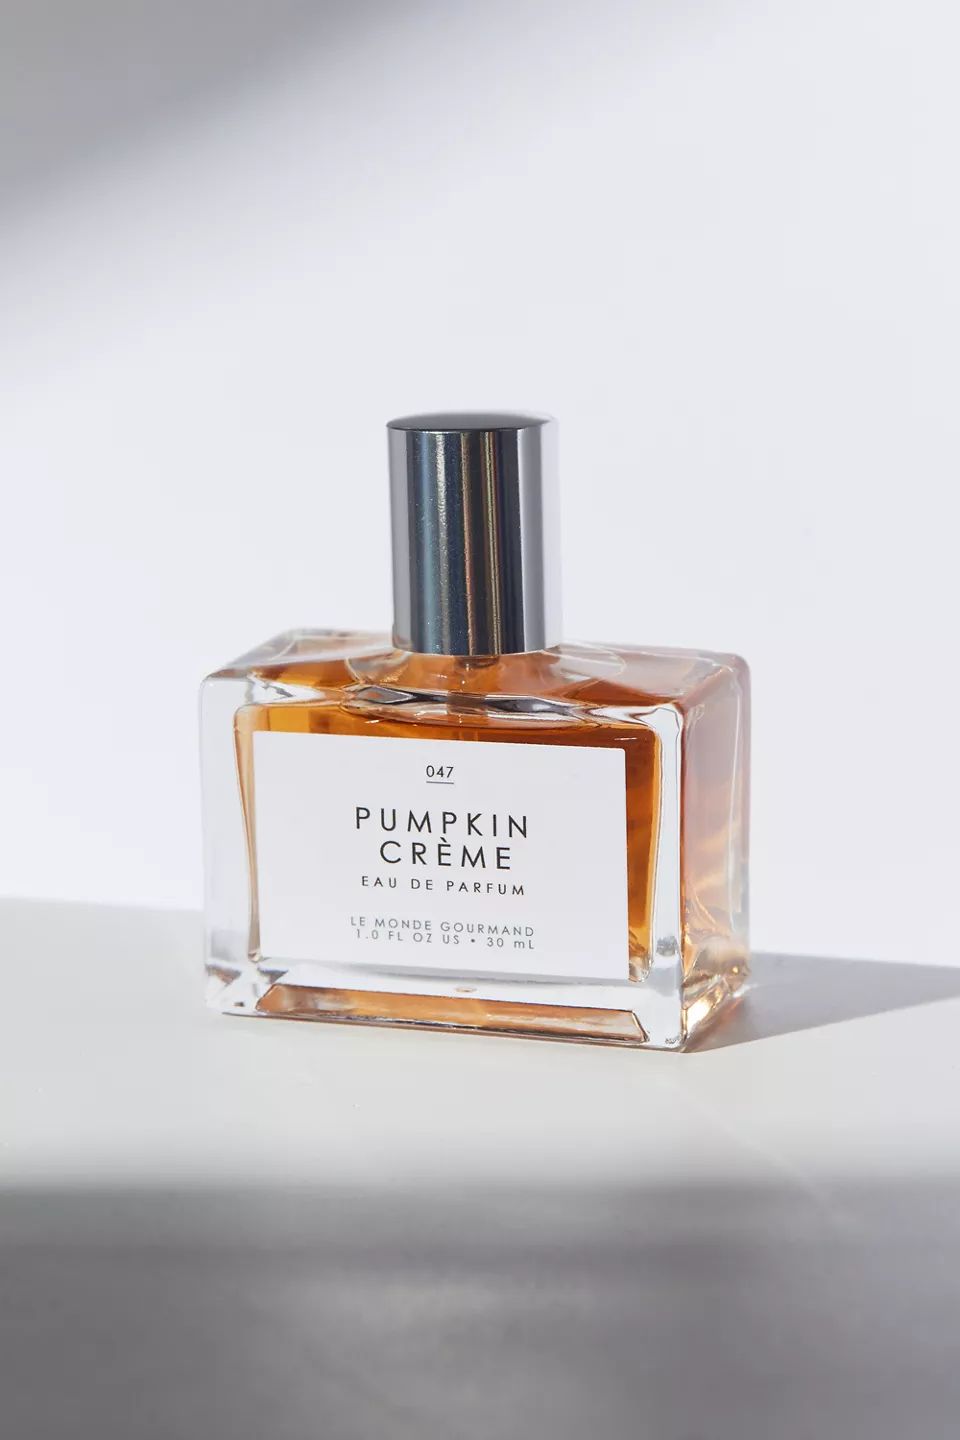 Pumpkin Creme Le Monde Gourmand perfume - a fragrance for women and men